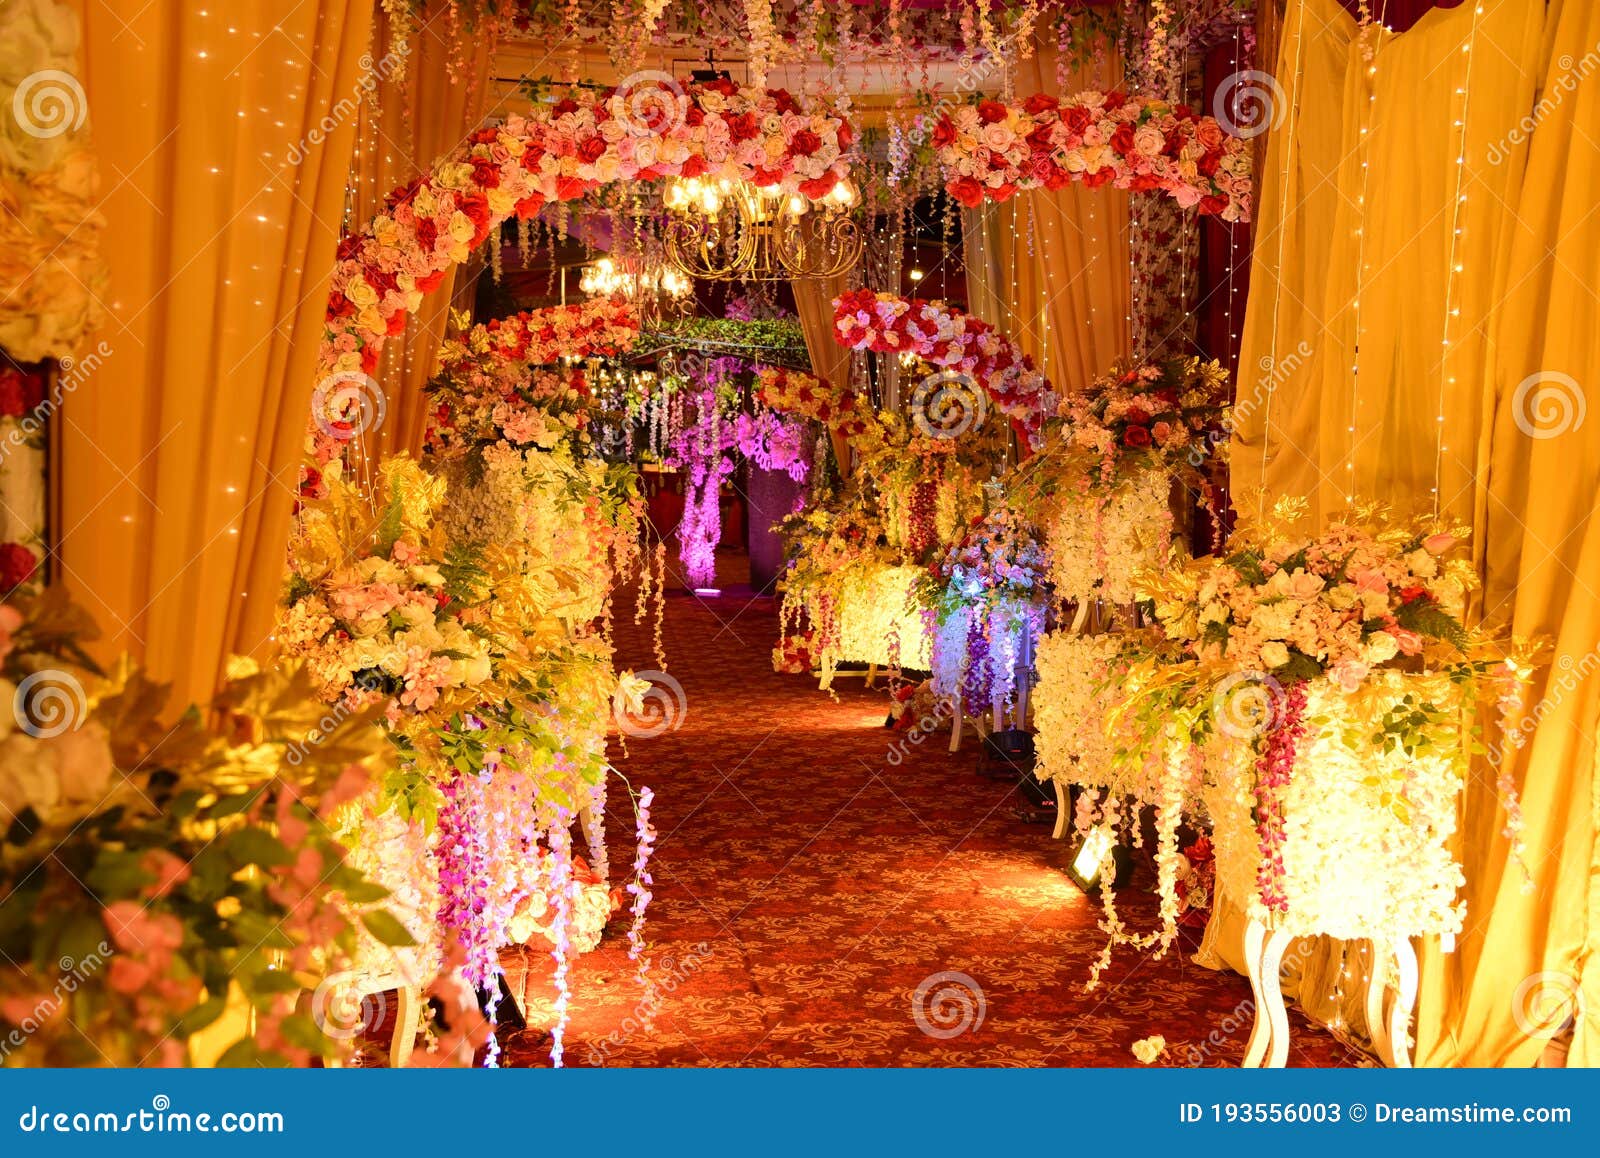 Indian Marriage Flower Decoration Entrance Stock Image - Image of ...